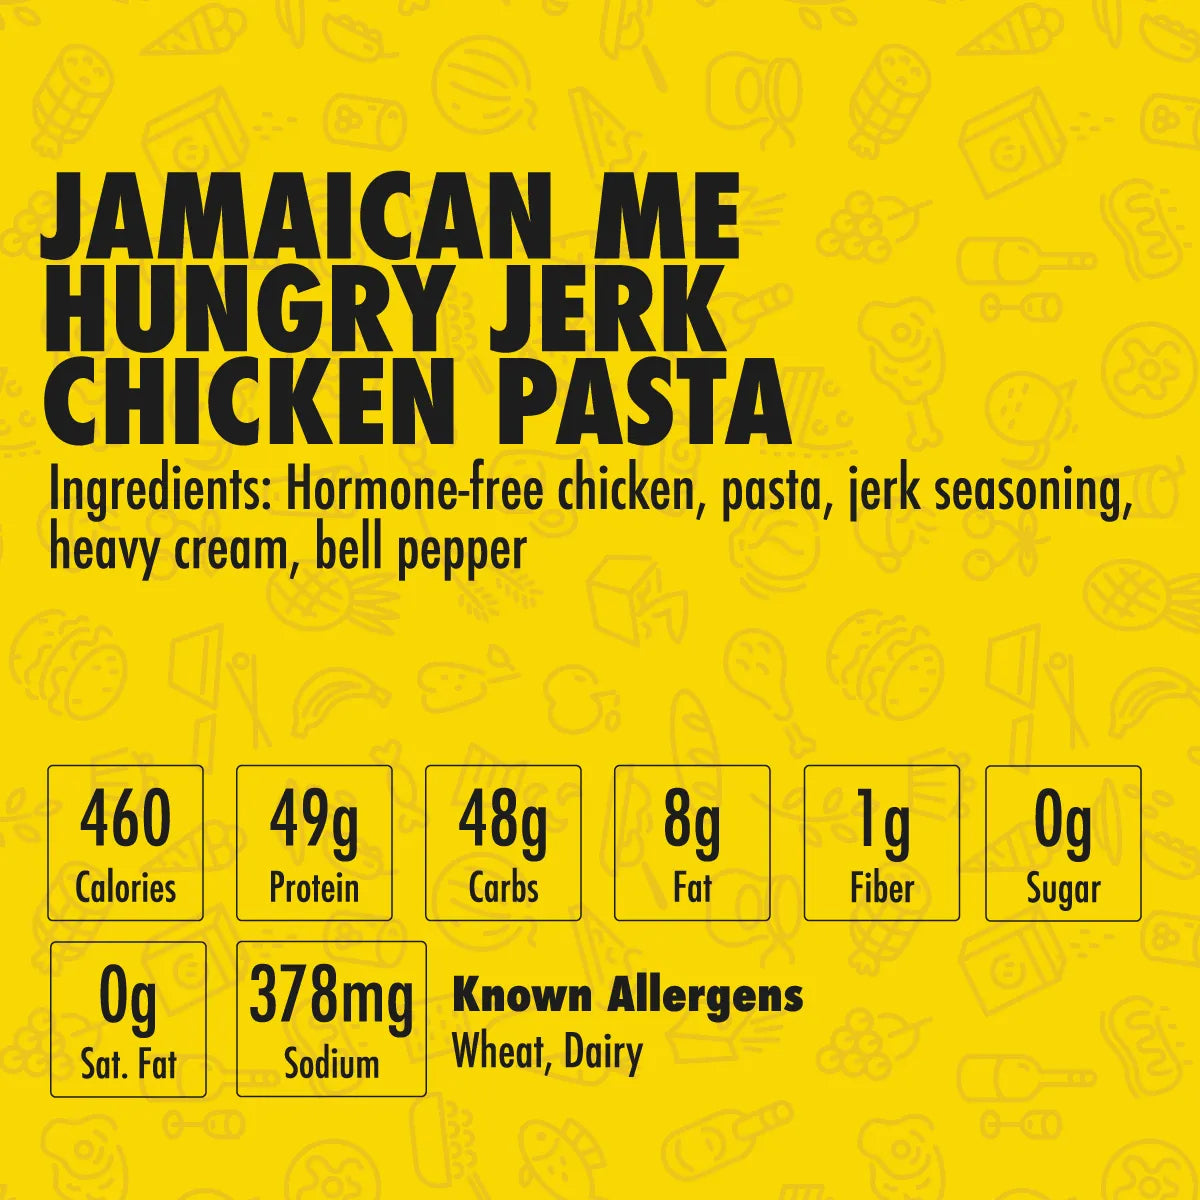 Jamaican Me Hungry Jerk Chicken Pasta